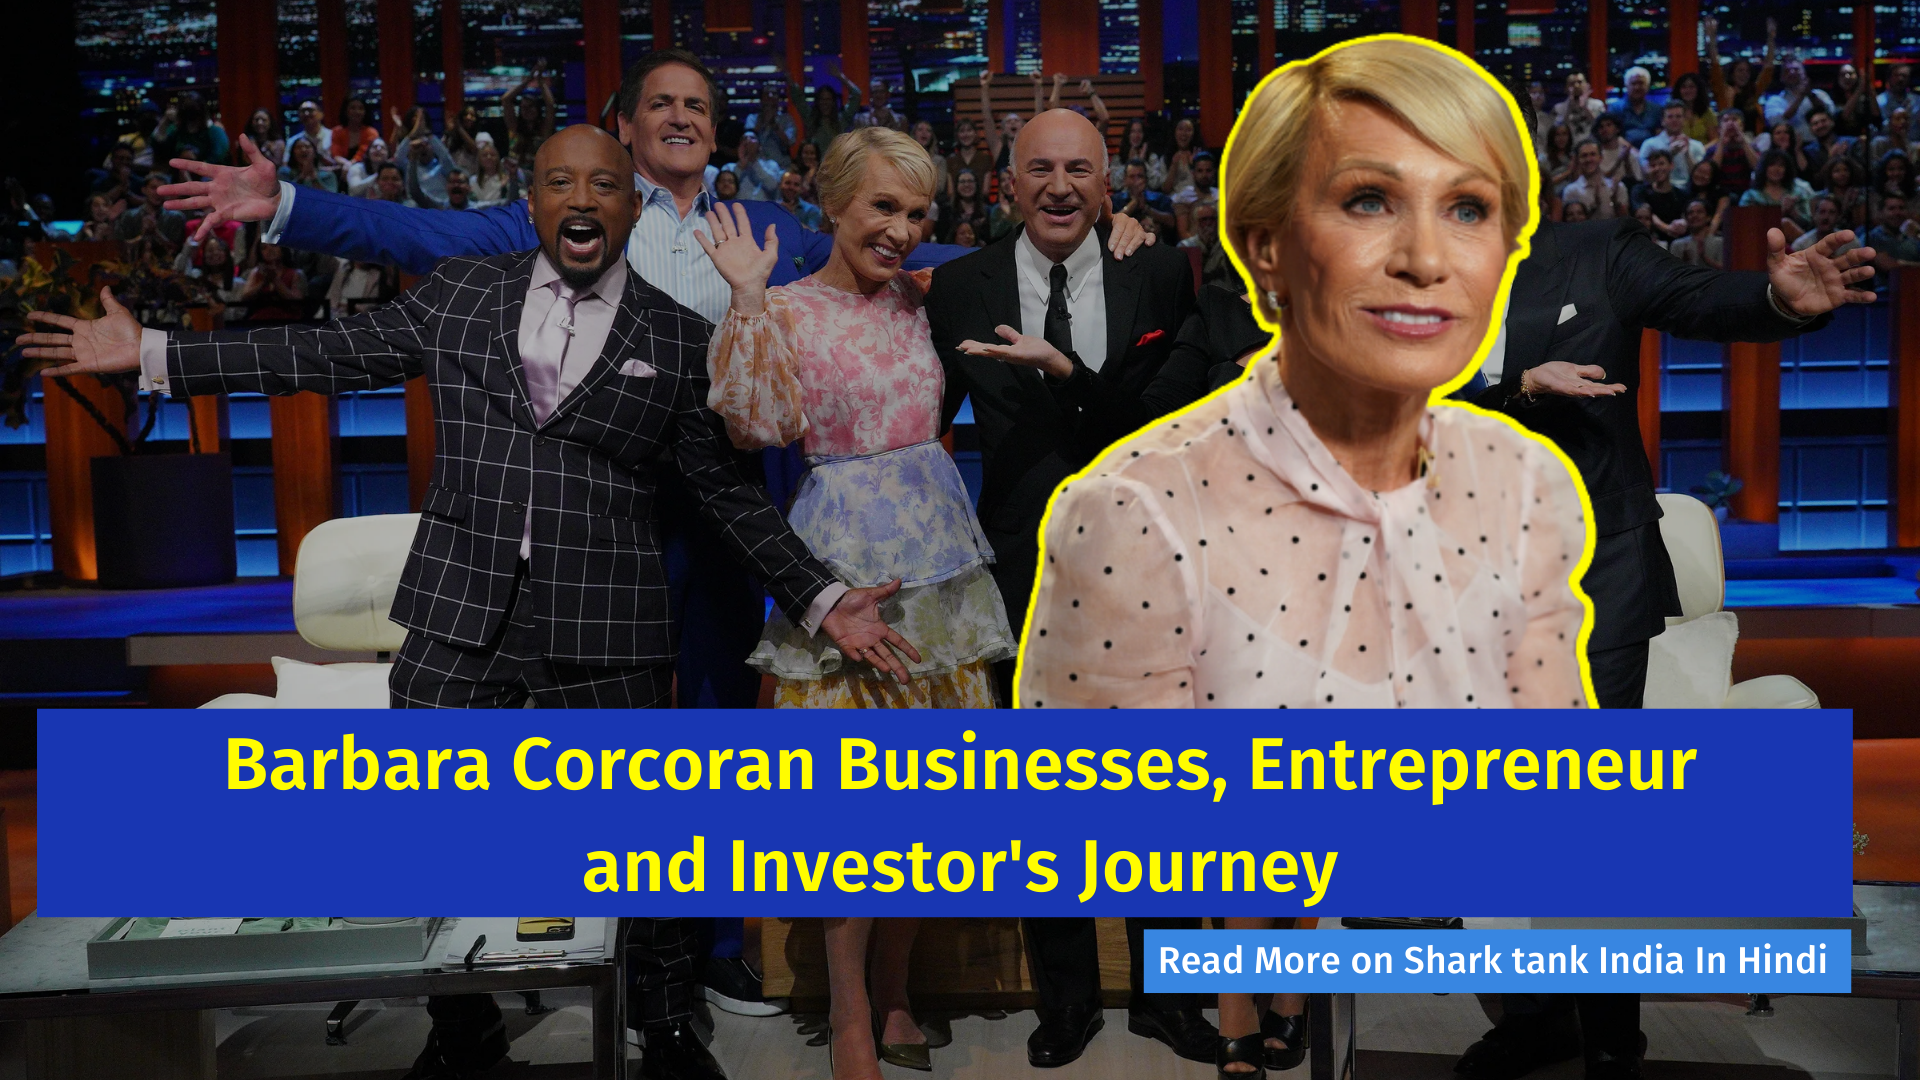 Barbara Corcoran Businesses, Entrepreneur and Investor's Journey